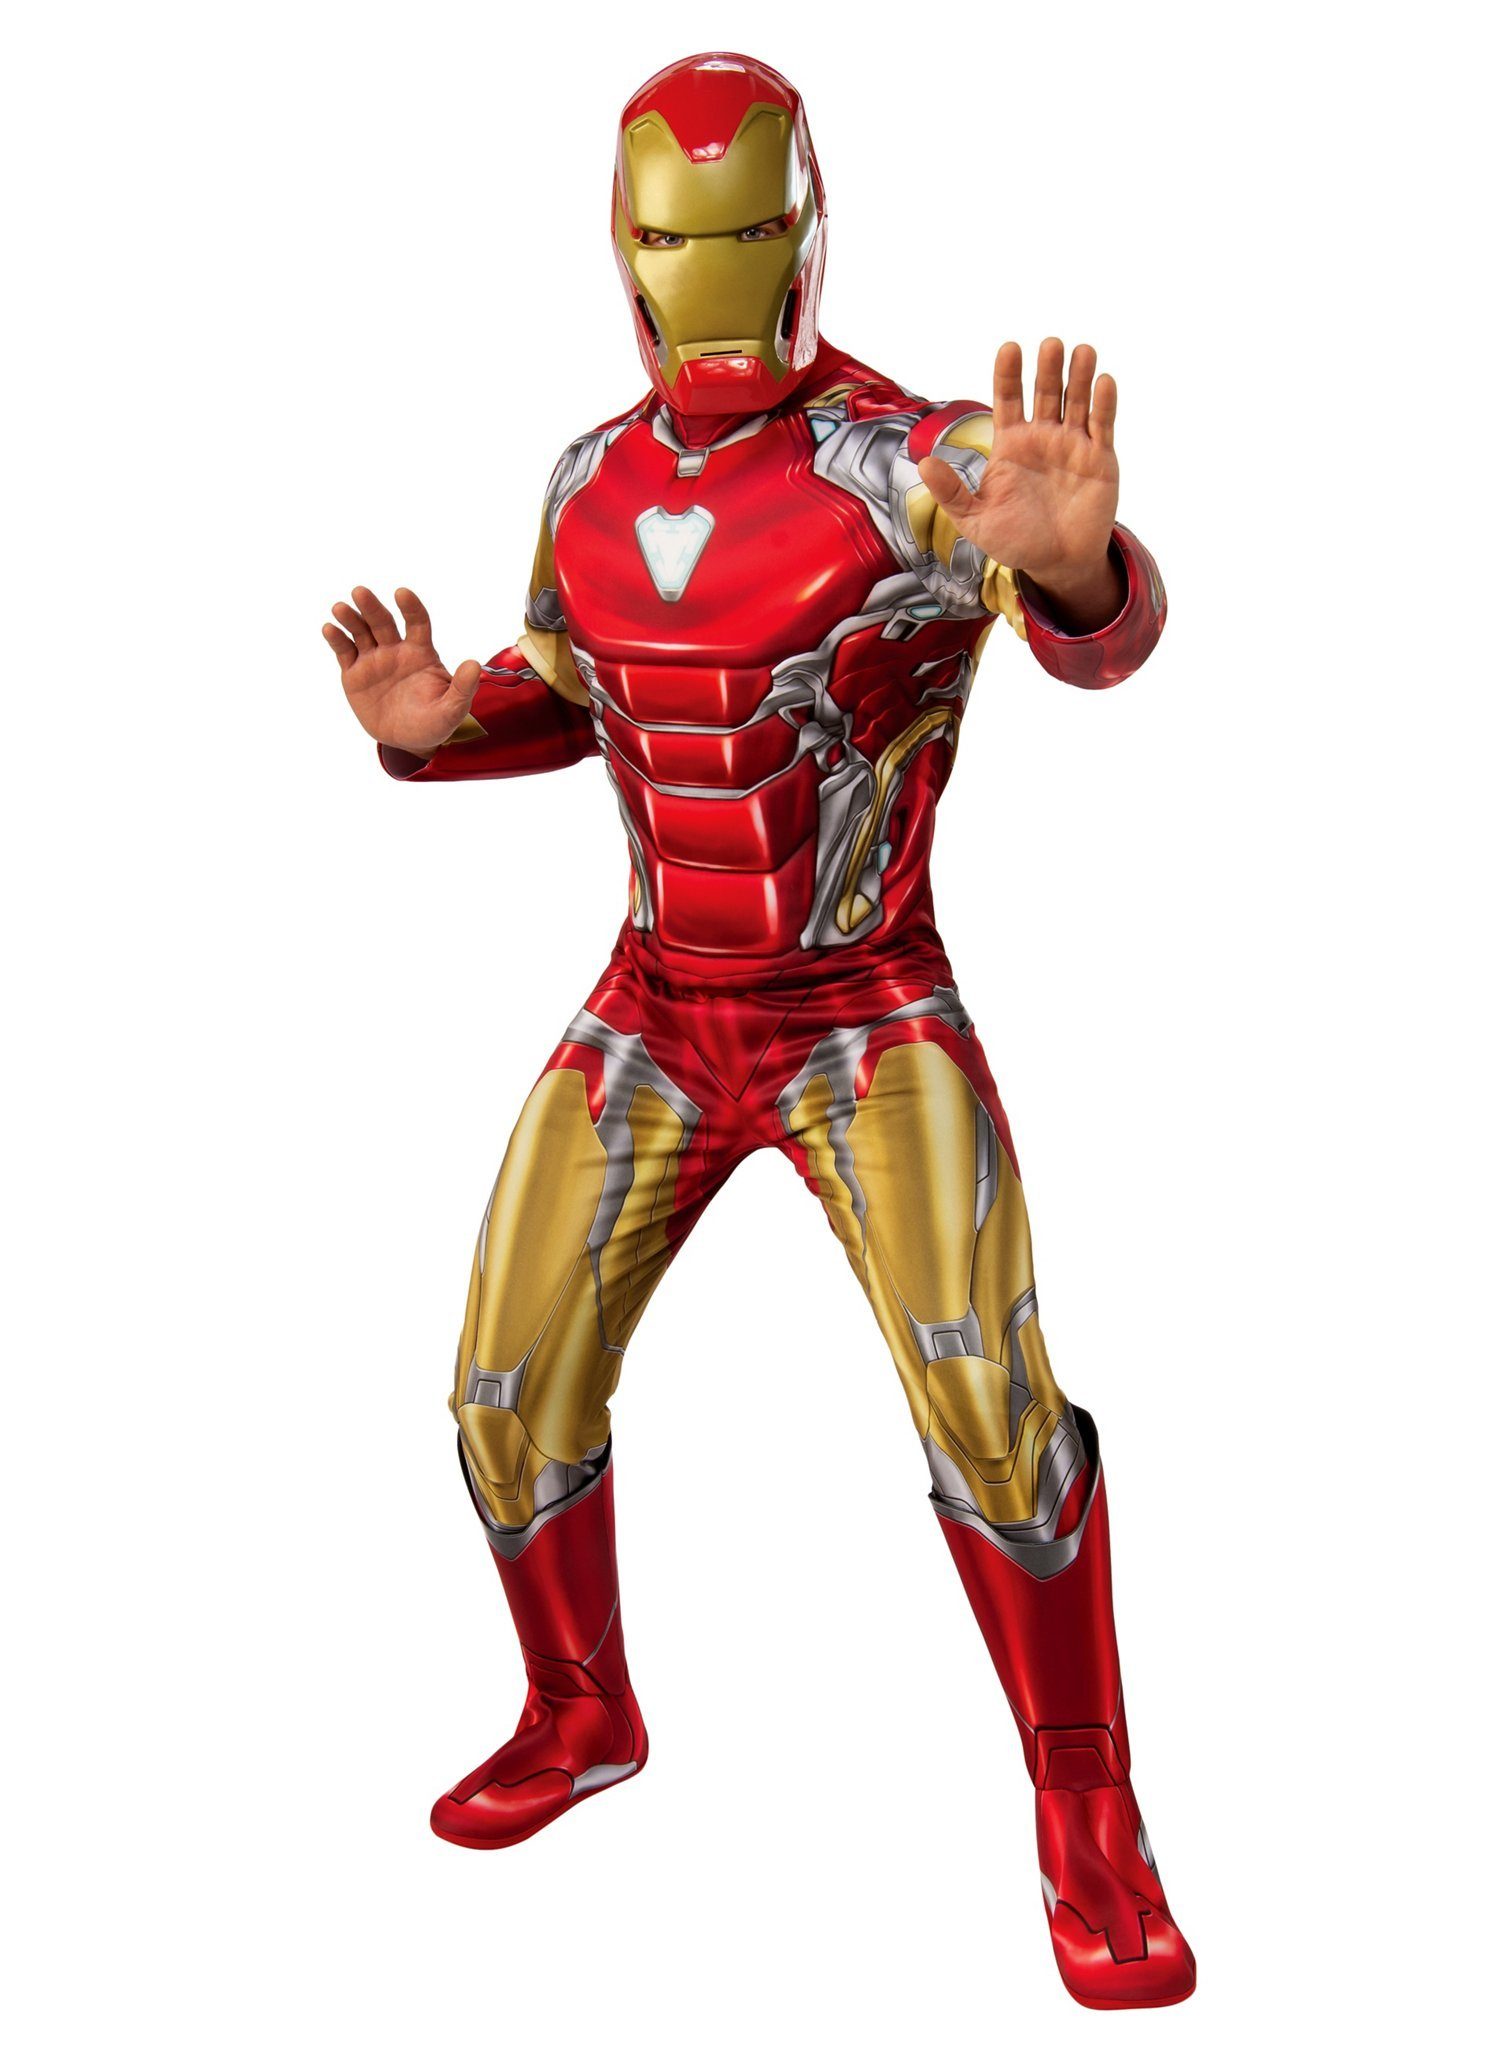 Rubie´s Kostüm Avengers Endgame - Iron Man Kostüm, Superheldenkostüm im Look des finalen Avengers-Films